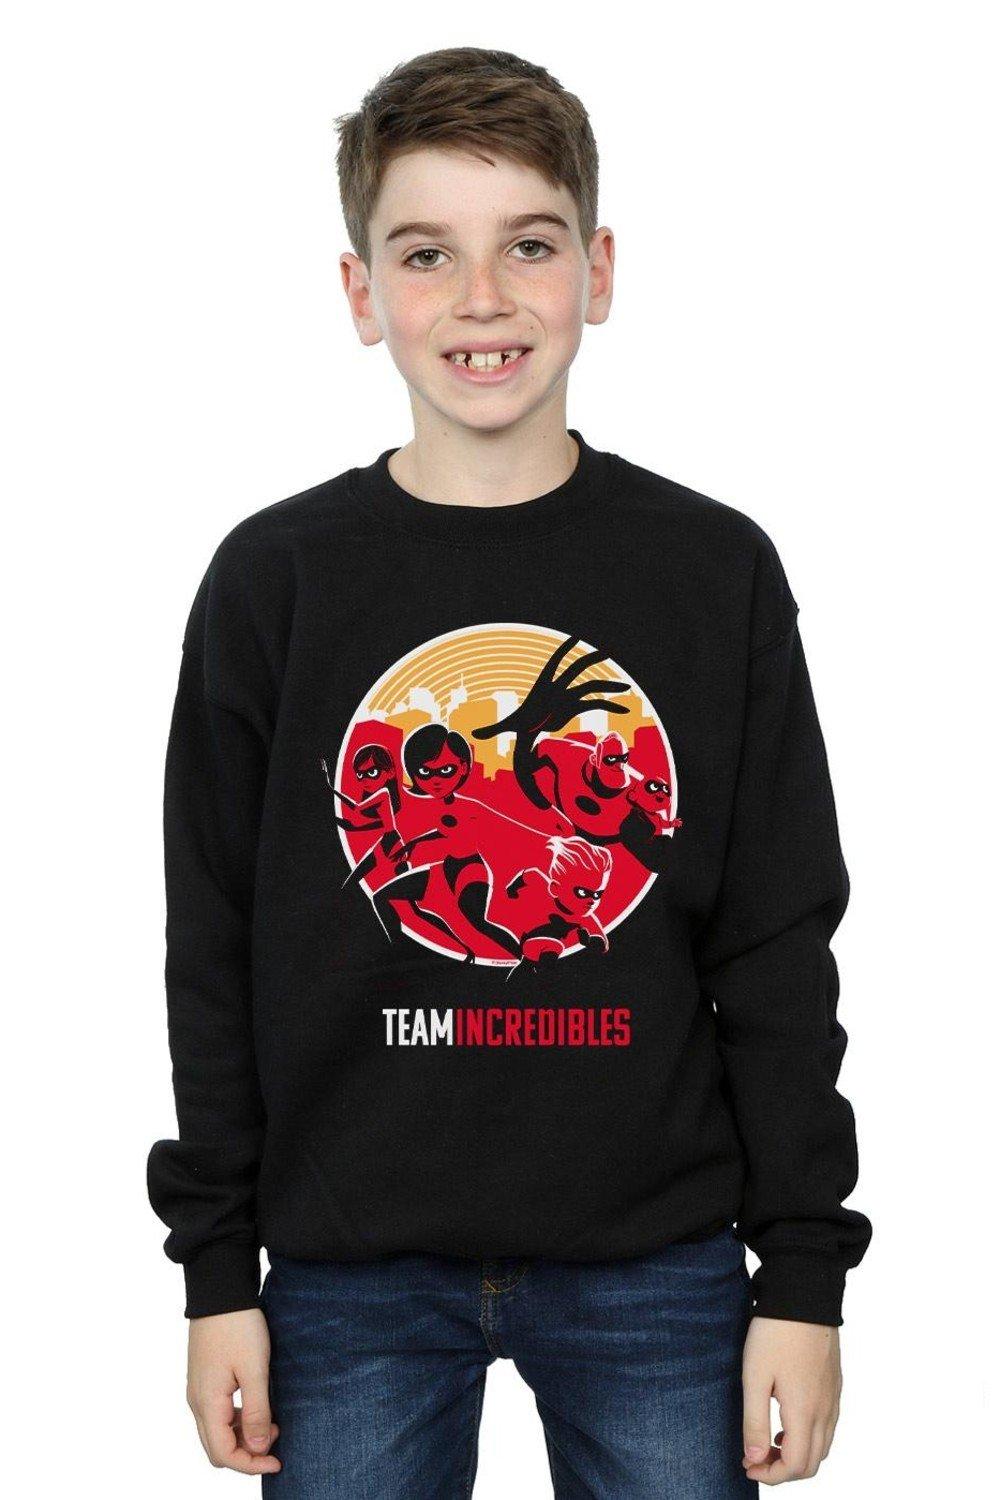 Incredibles 2 Team Incredibles Sweatshirt